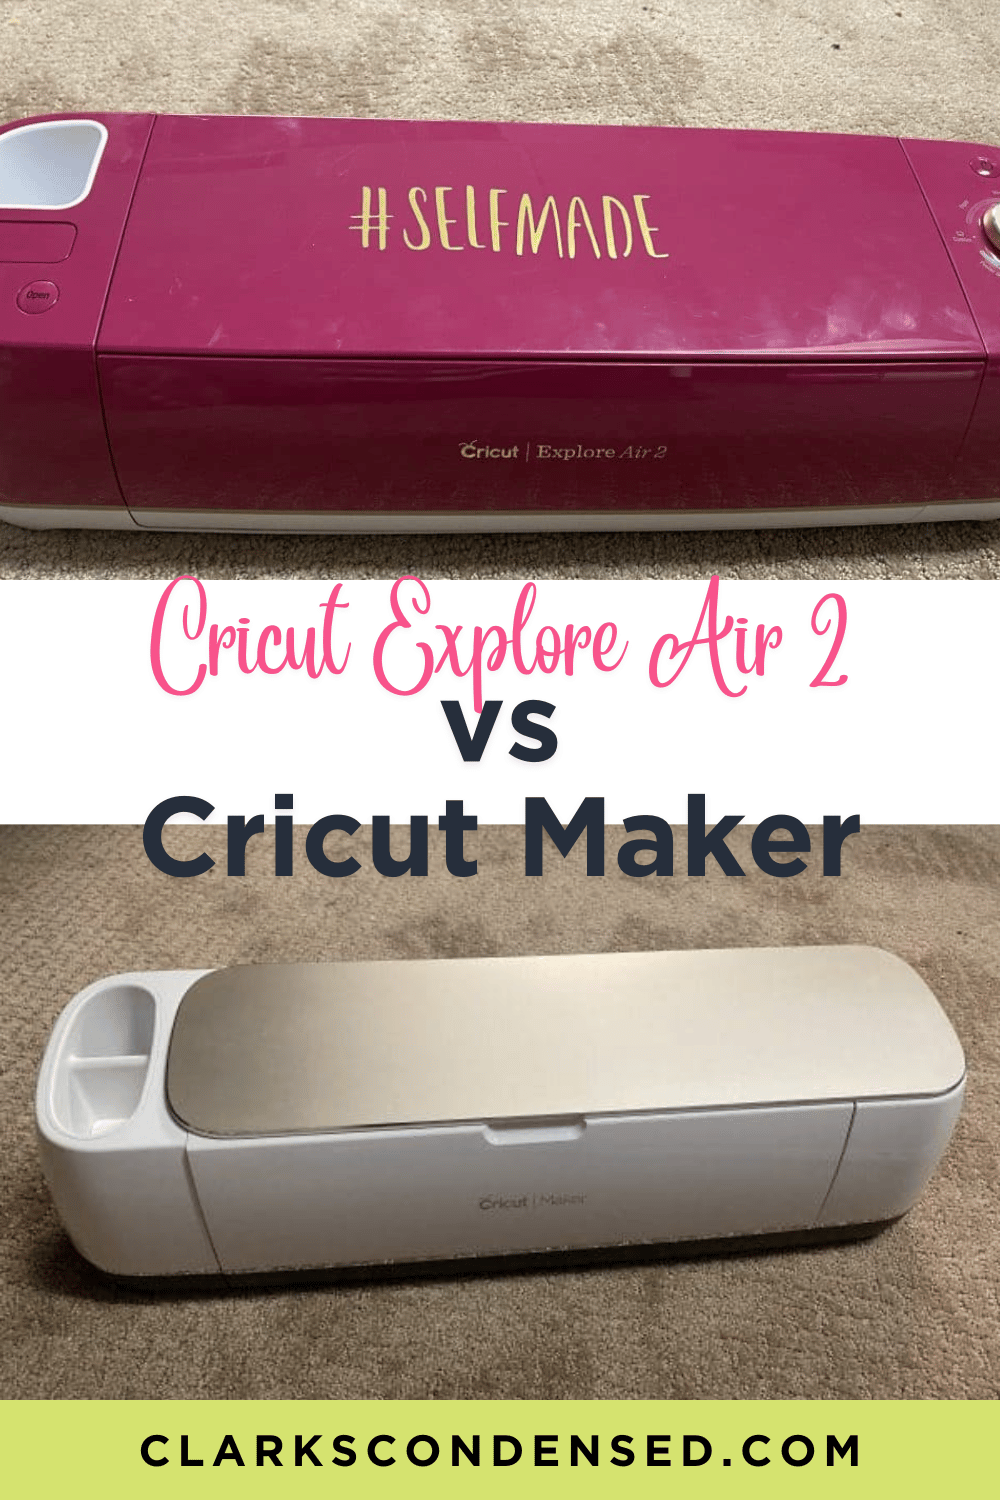 Cricut Explore Air 2 Vs Explore 3 - Which One Should I Choose